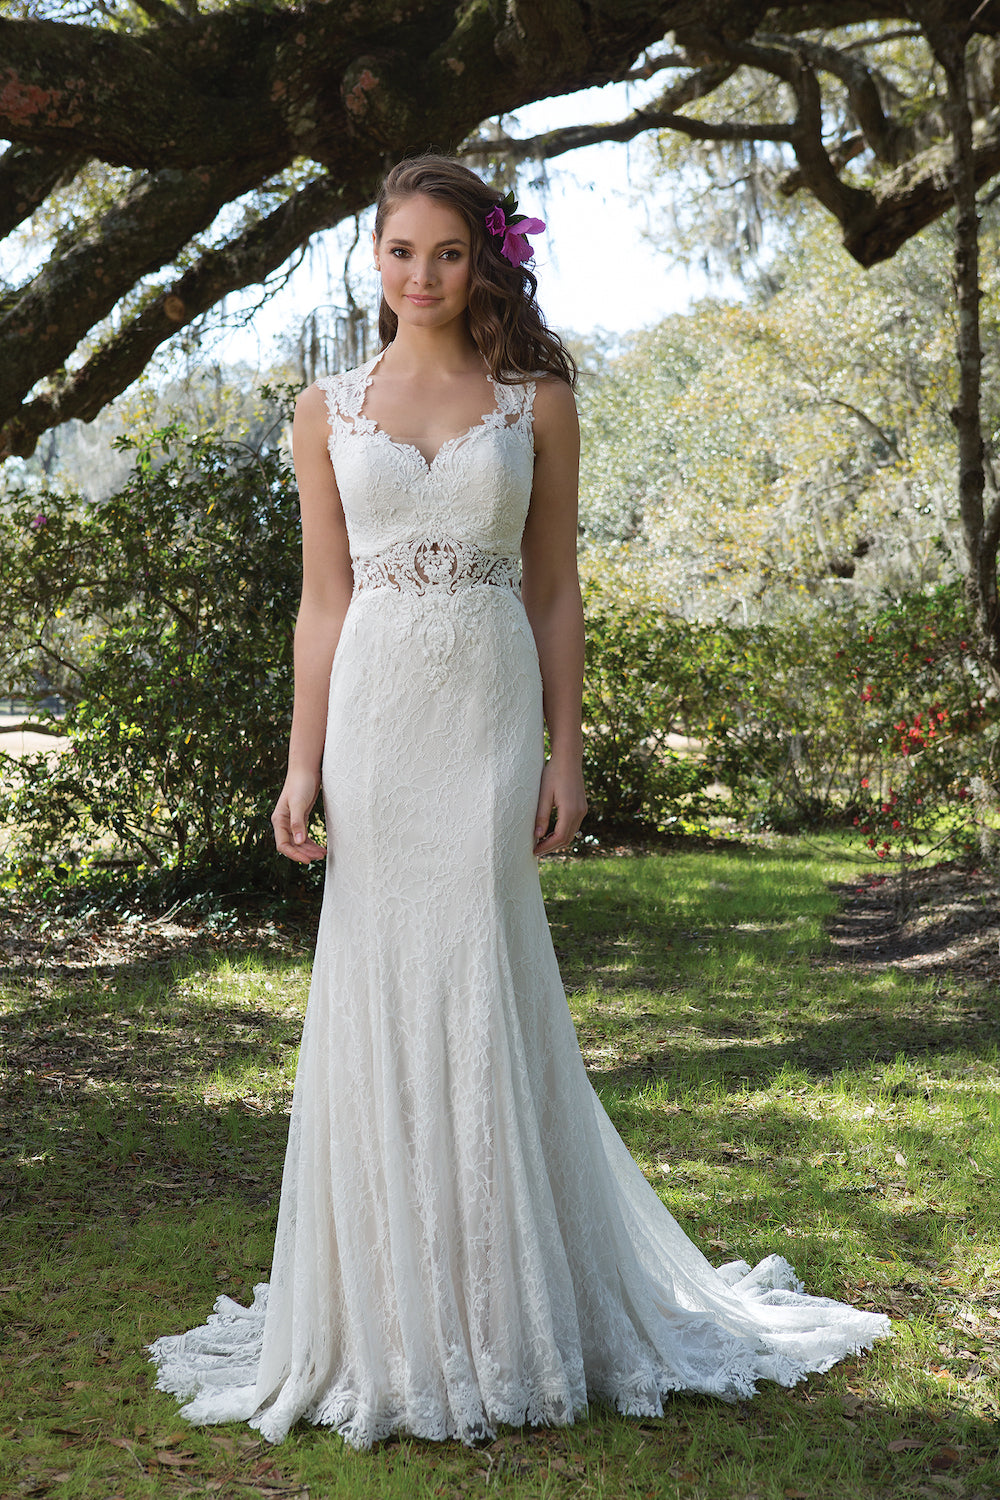 *NEW* Sweetheart Designer Wedding Gown - #6168